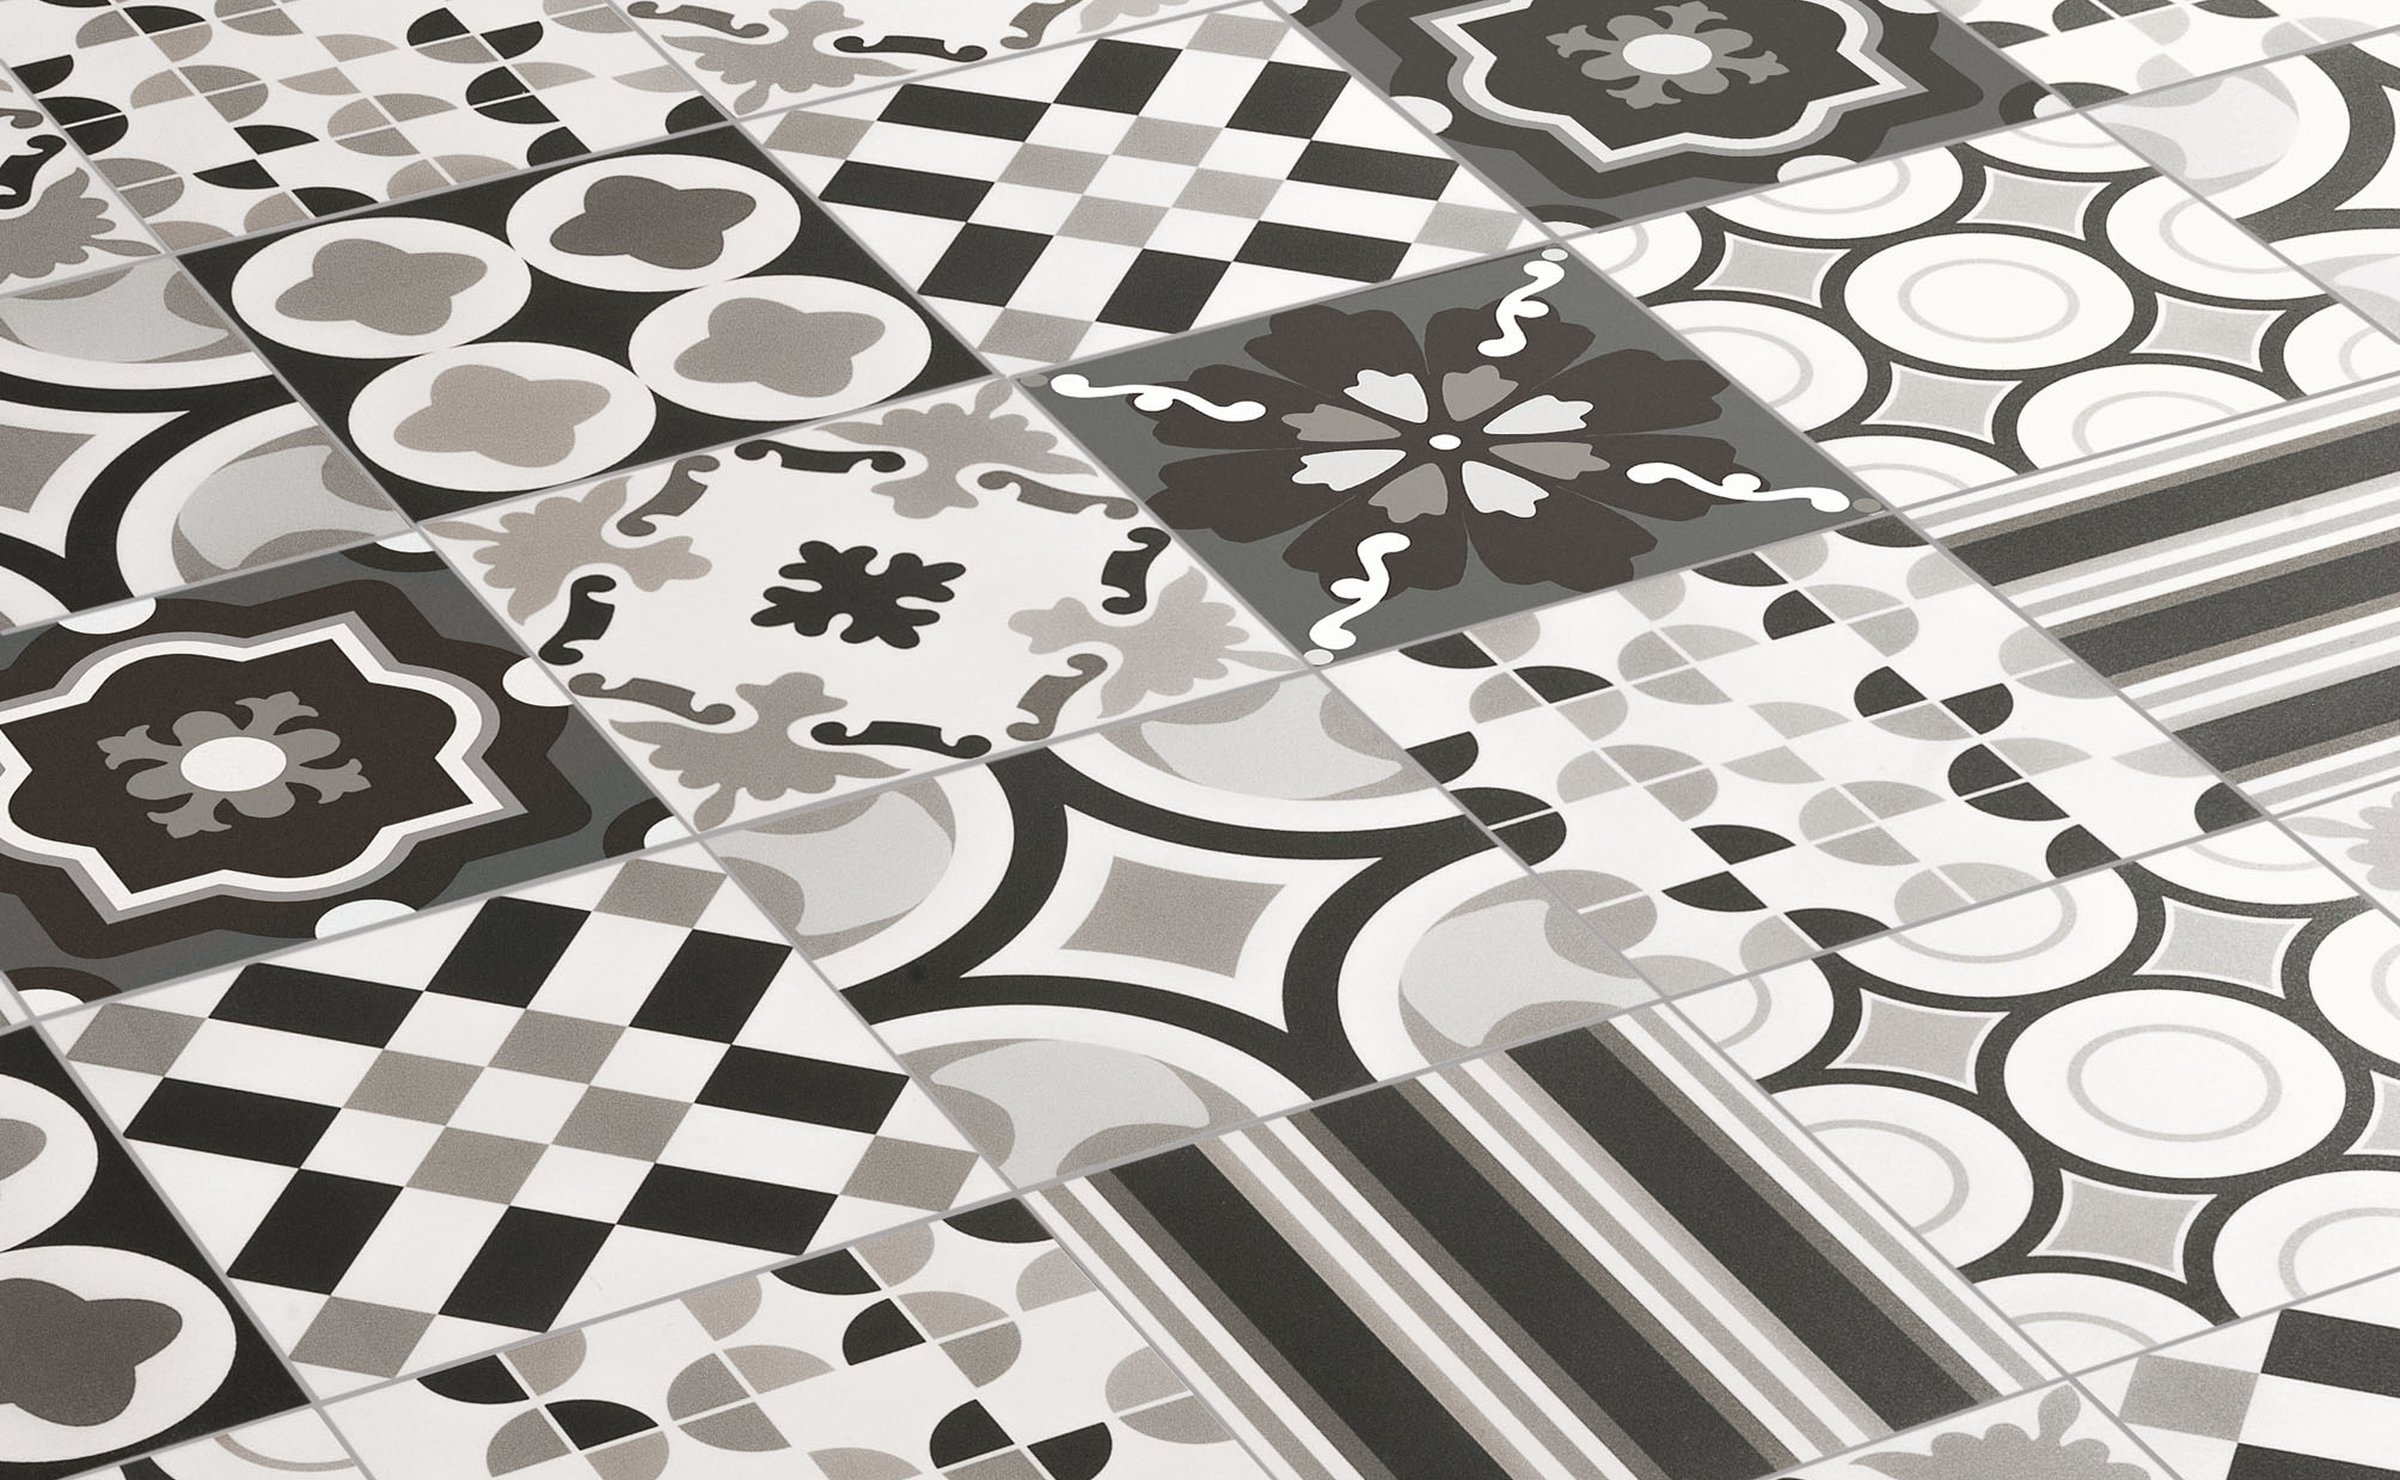 Patchwork Black&White: porcelain tiles